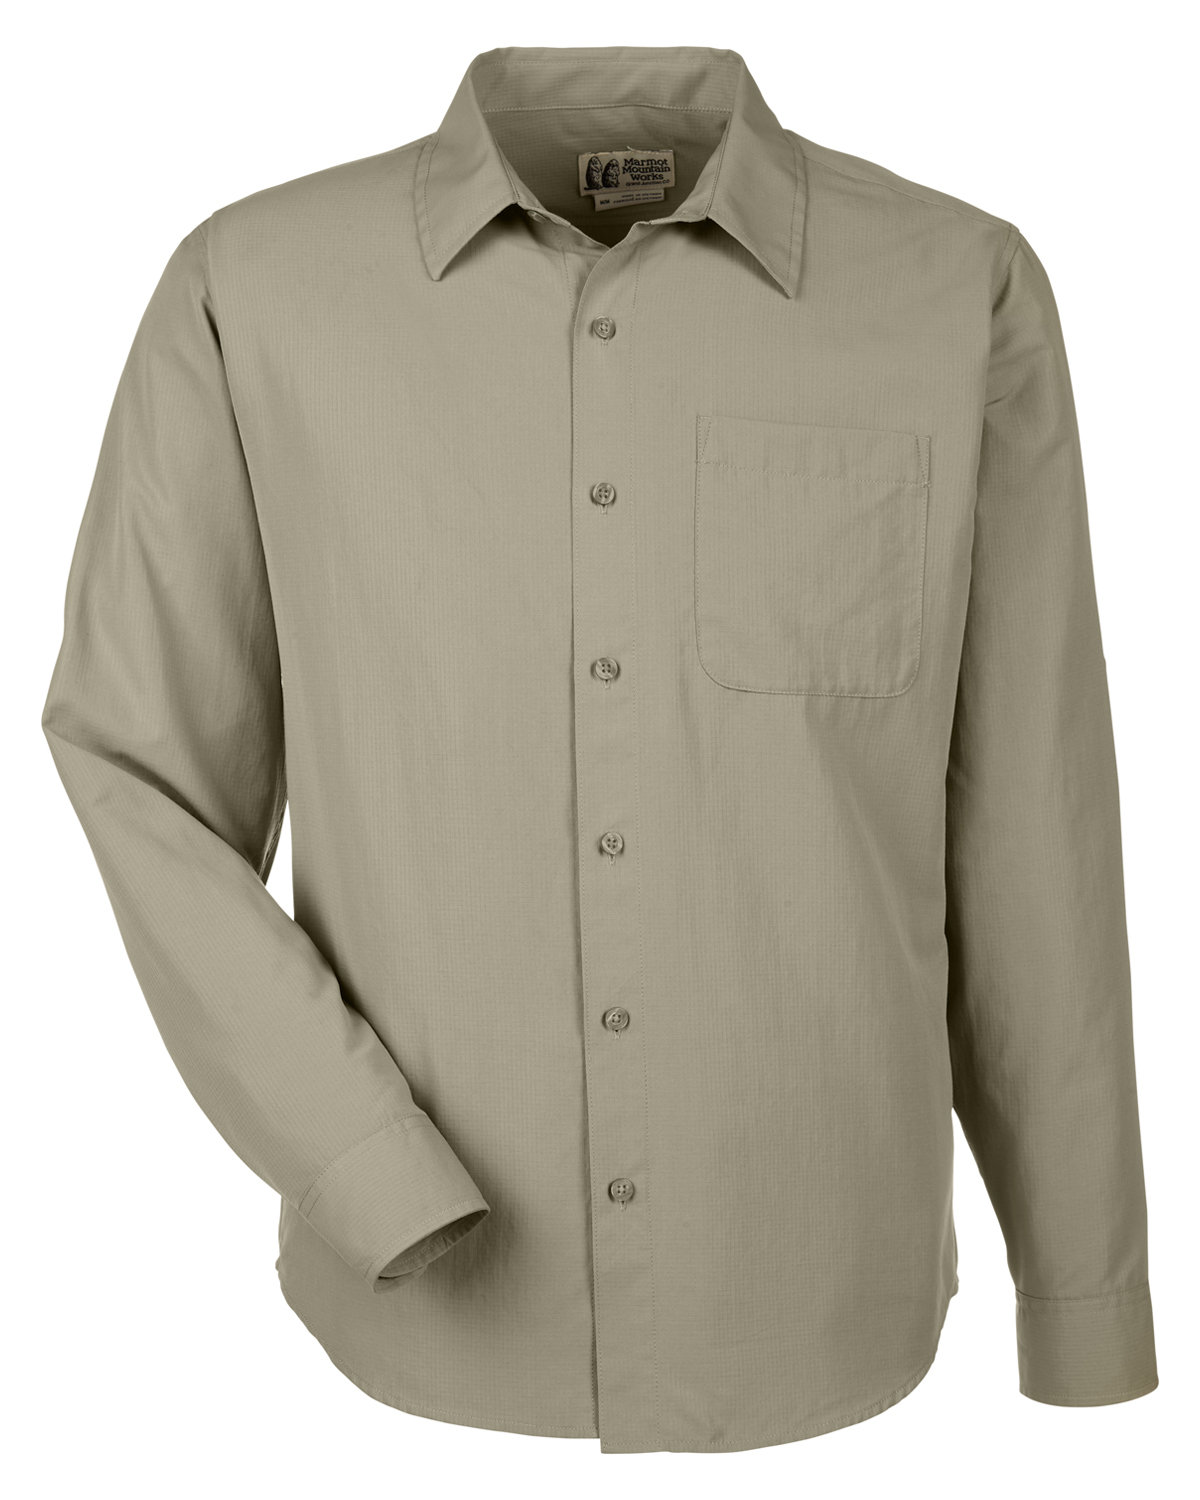 Marmot M14089 - Men's Aerobora Long-Sleeve Woven Shirt